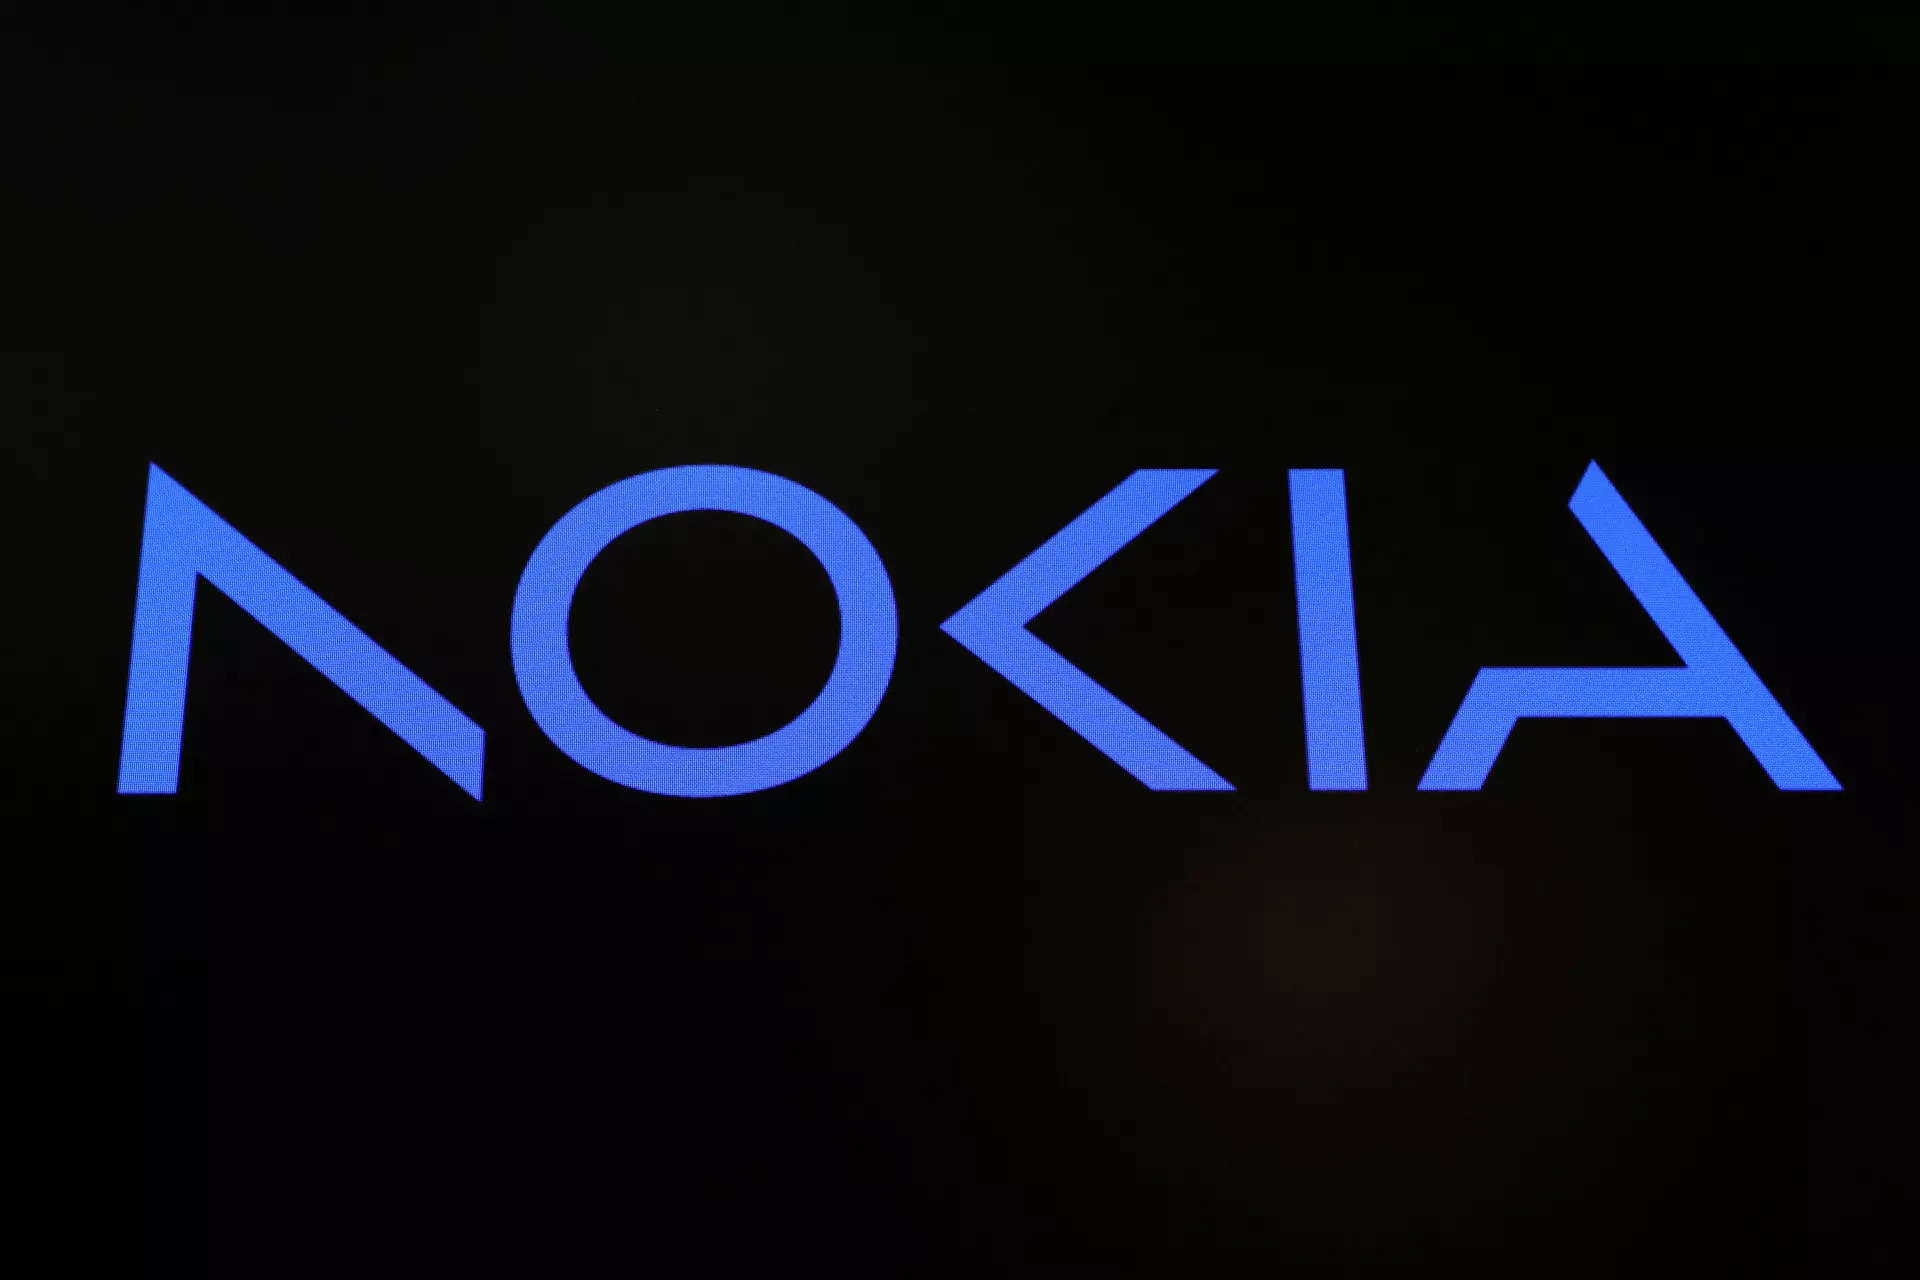 nokia networks logo